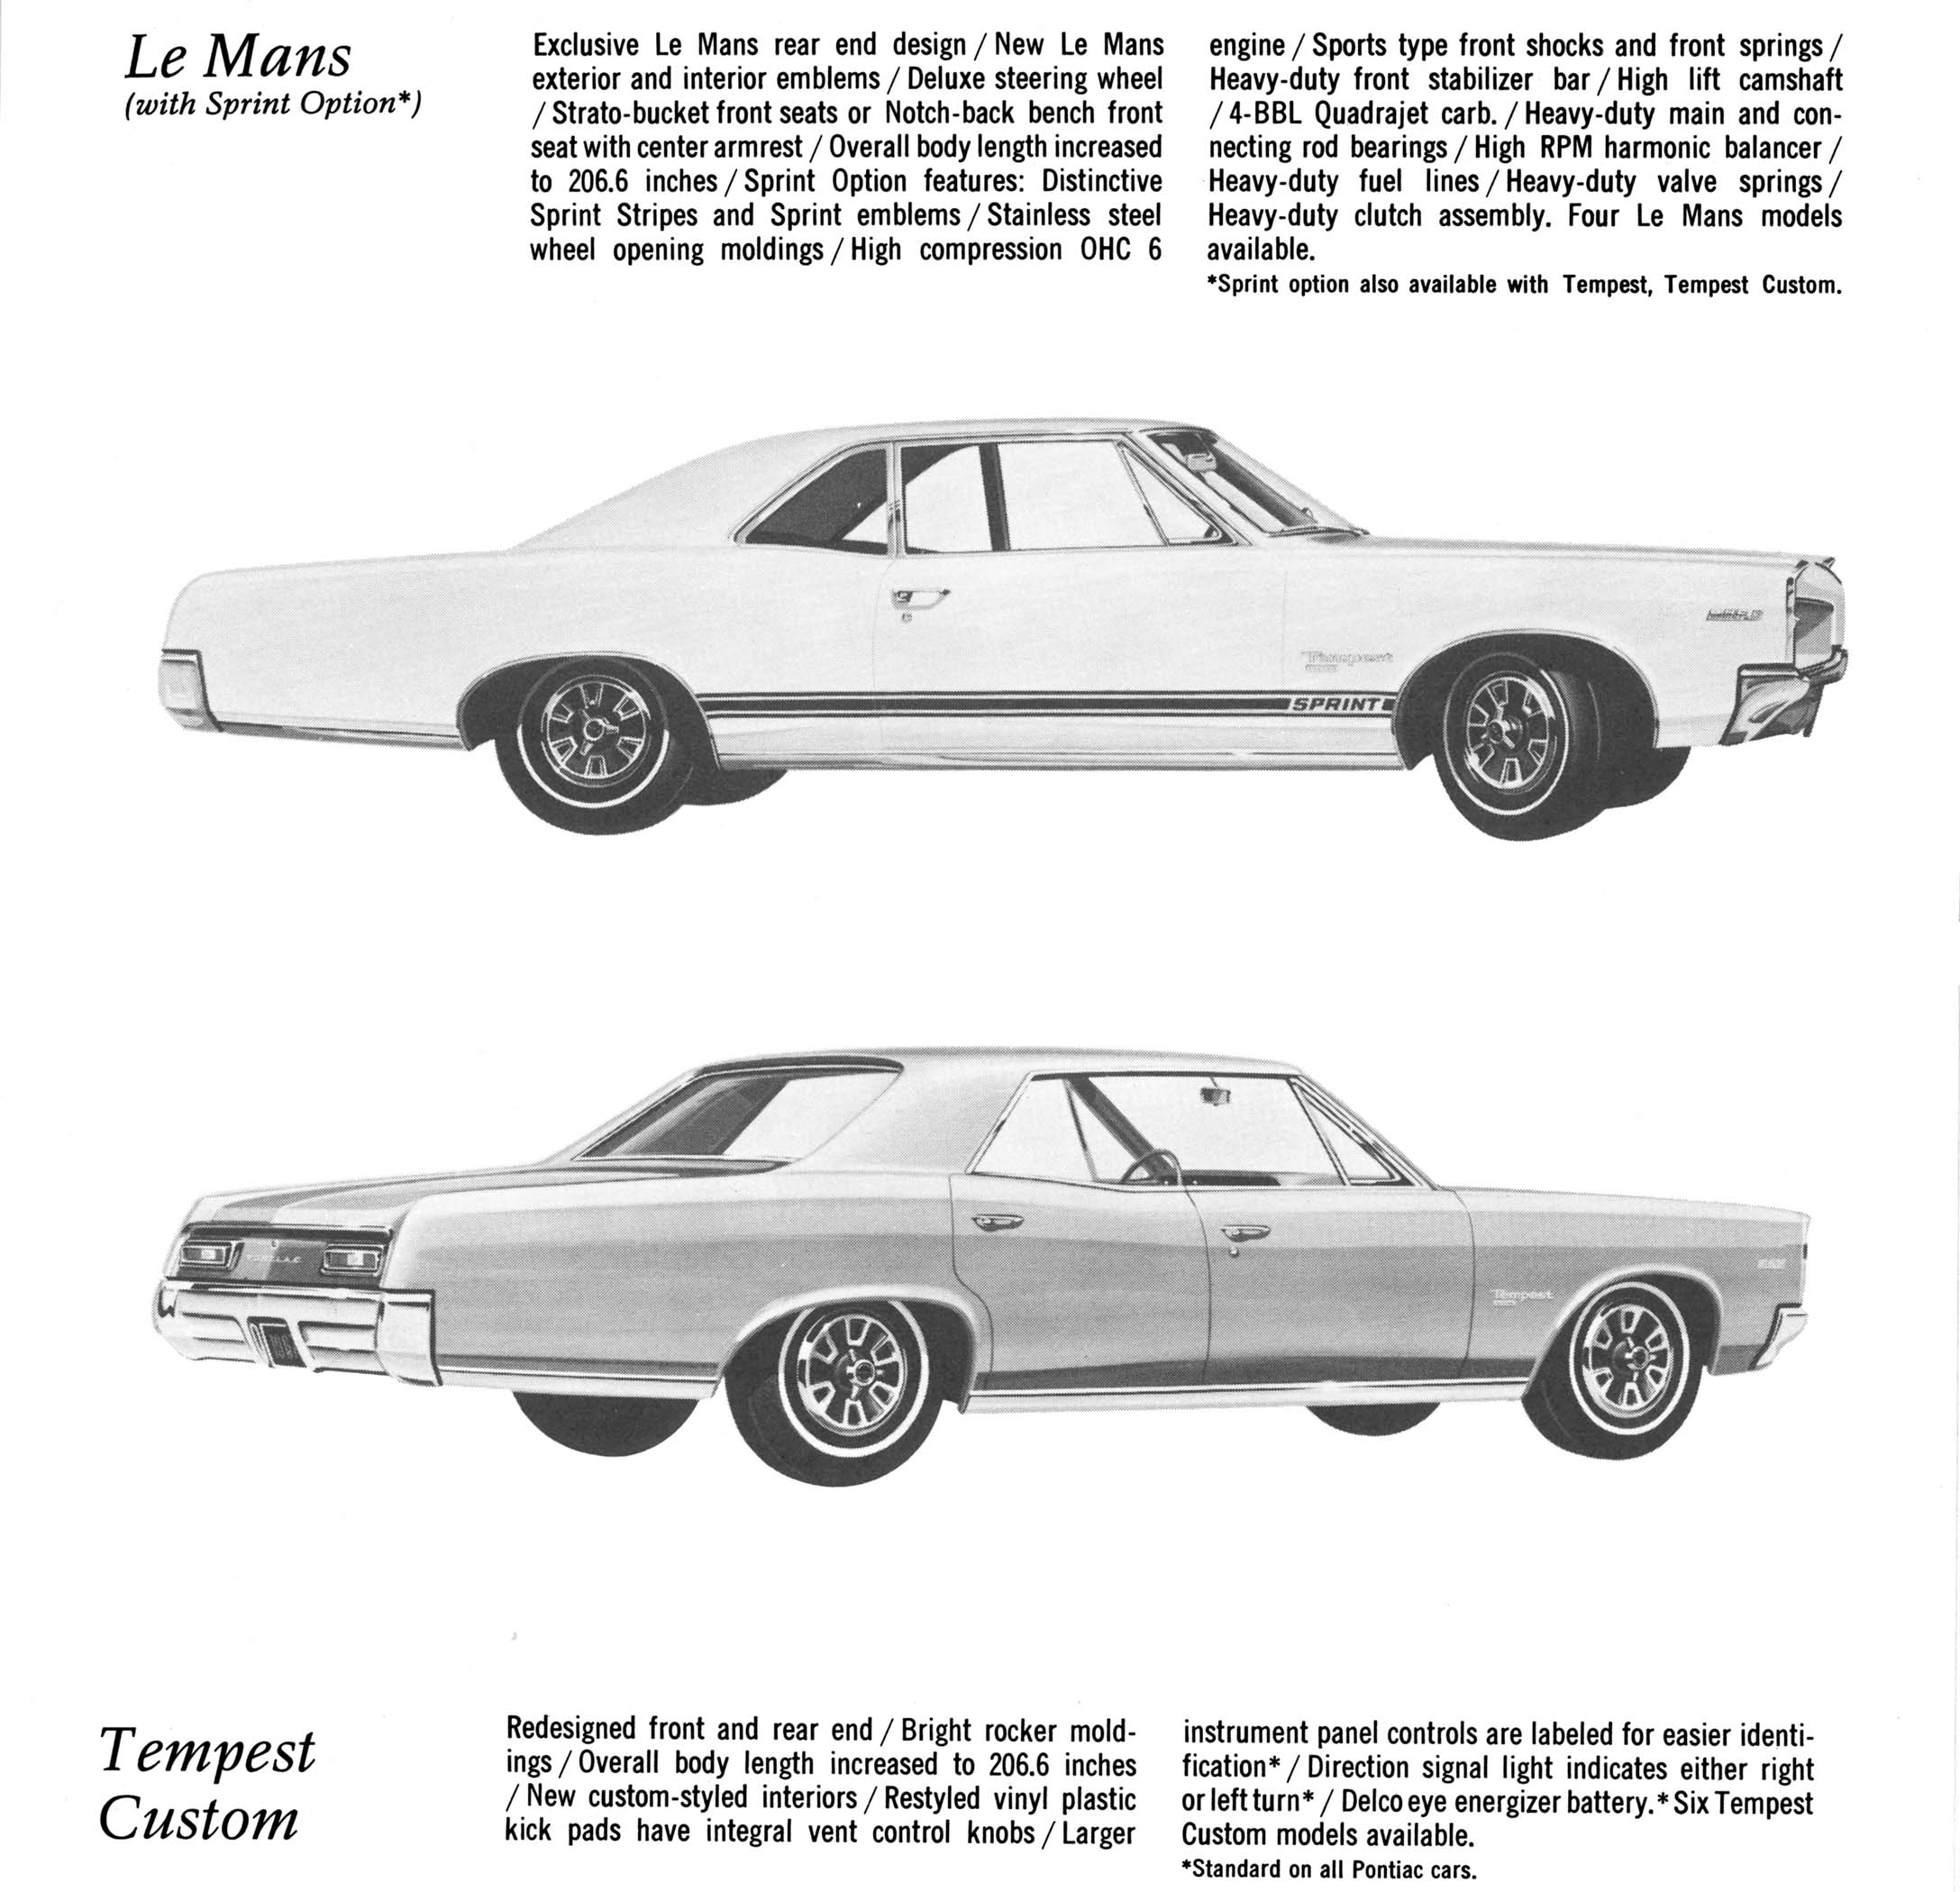 1967_Pontiac_-Whats_New-07